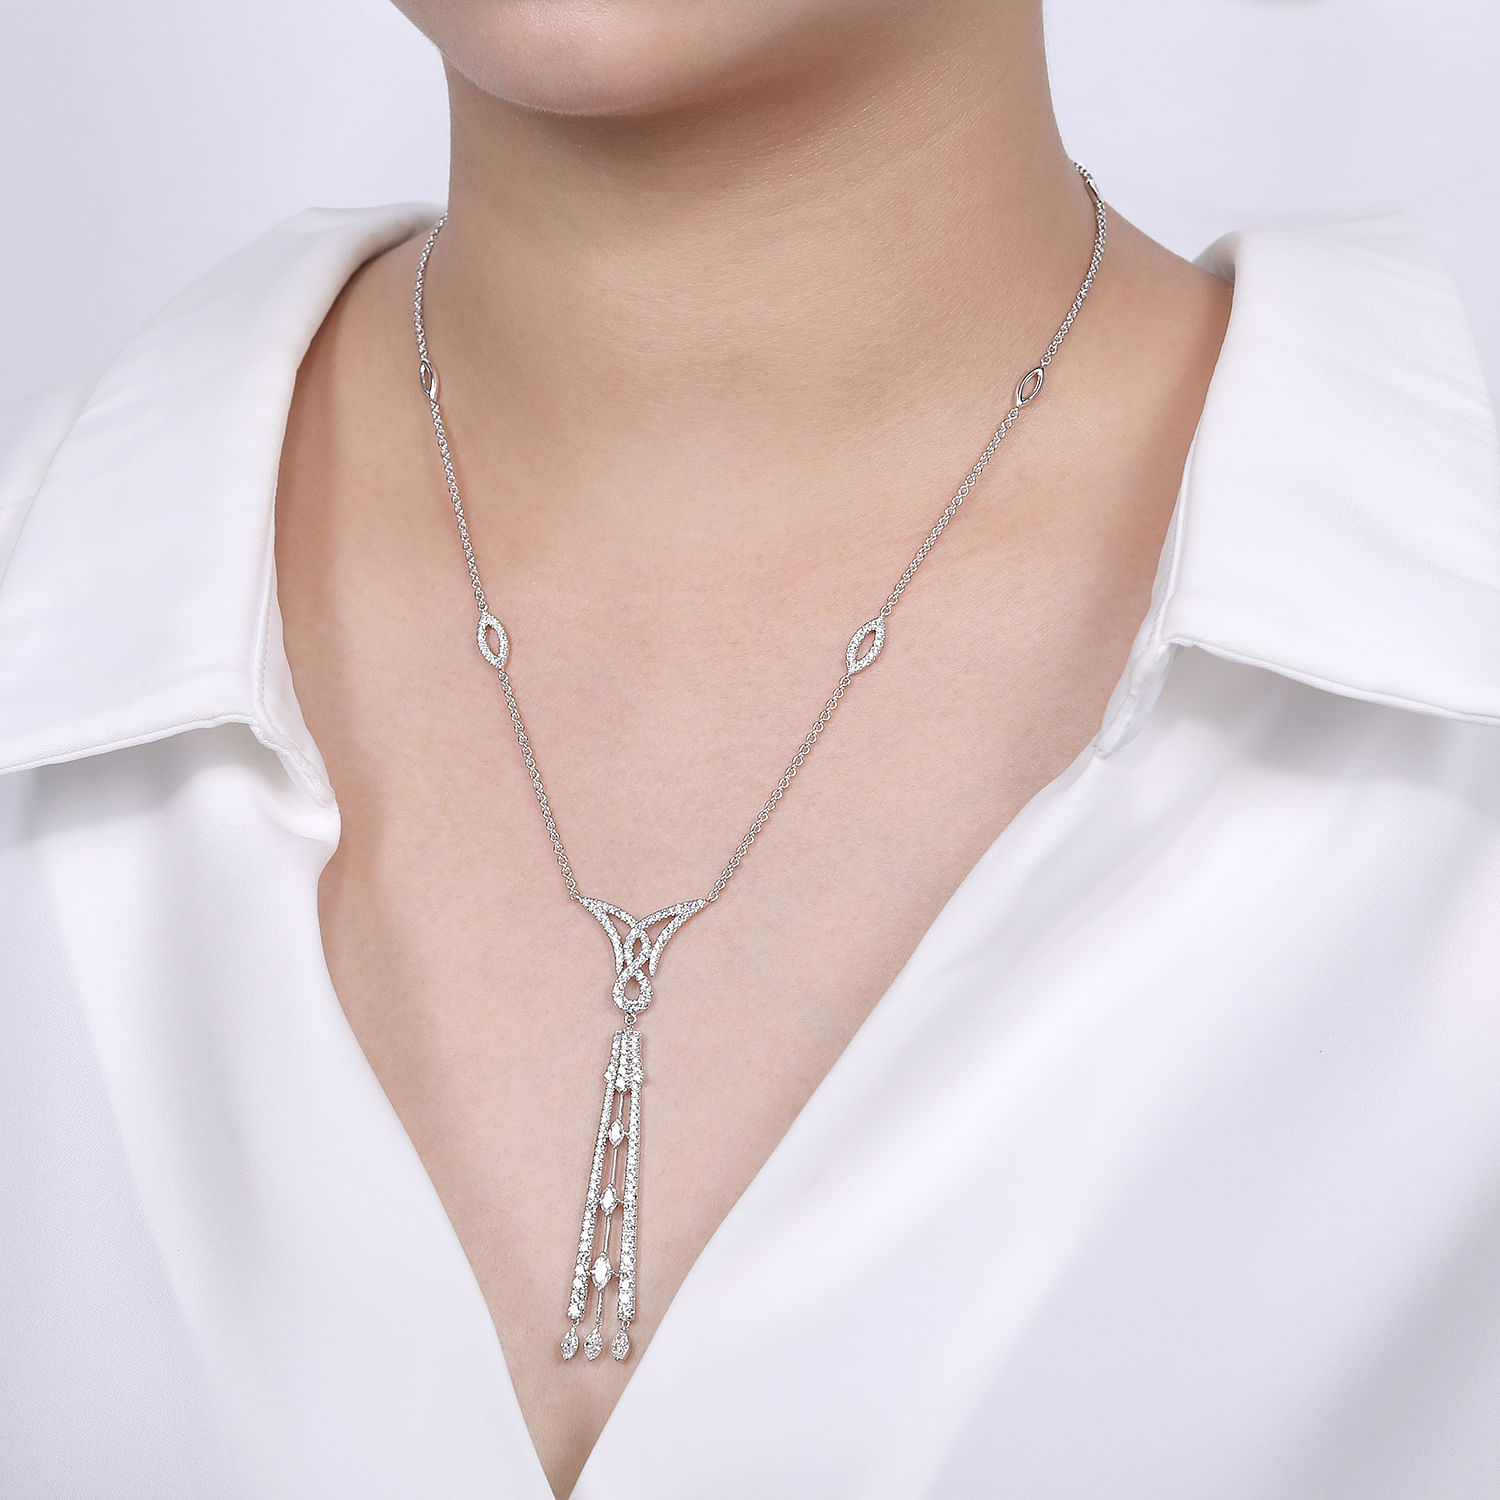 20 inch Art Deco Inspired 18K White Gold Diamond Pavé Pendant Necklace